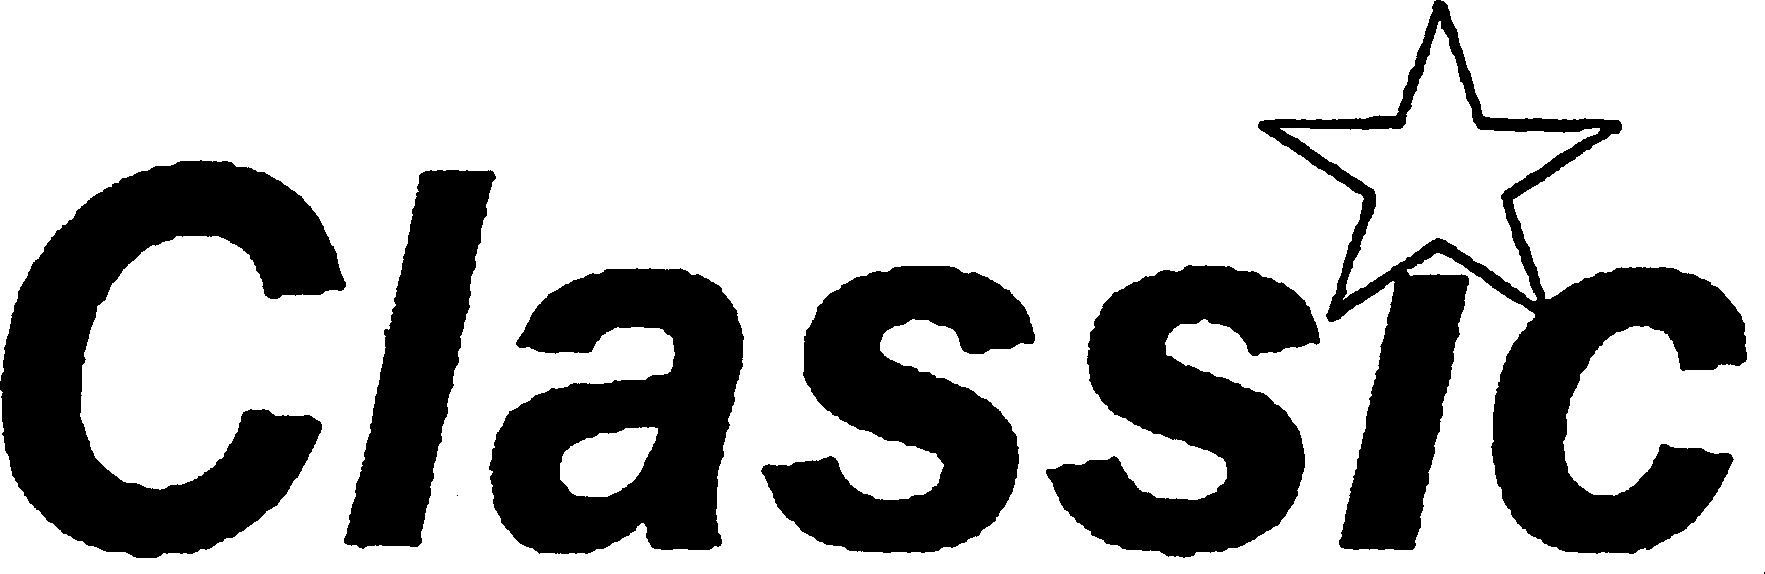 Trademark Logo CLASSIC